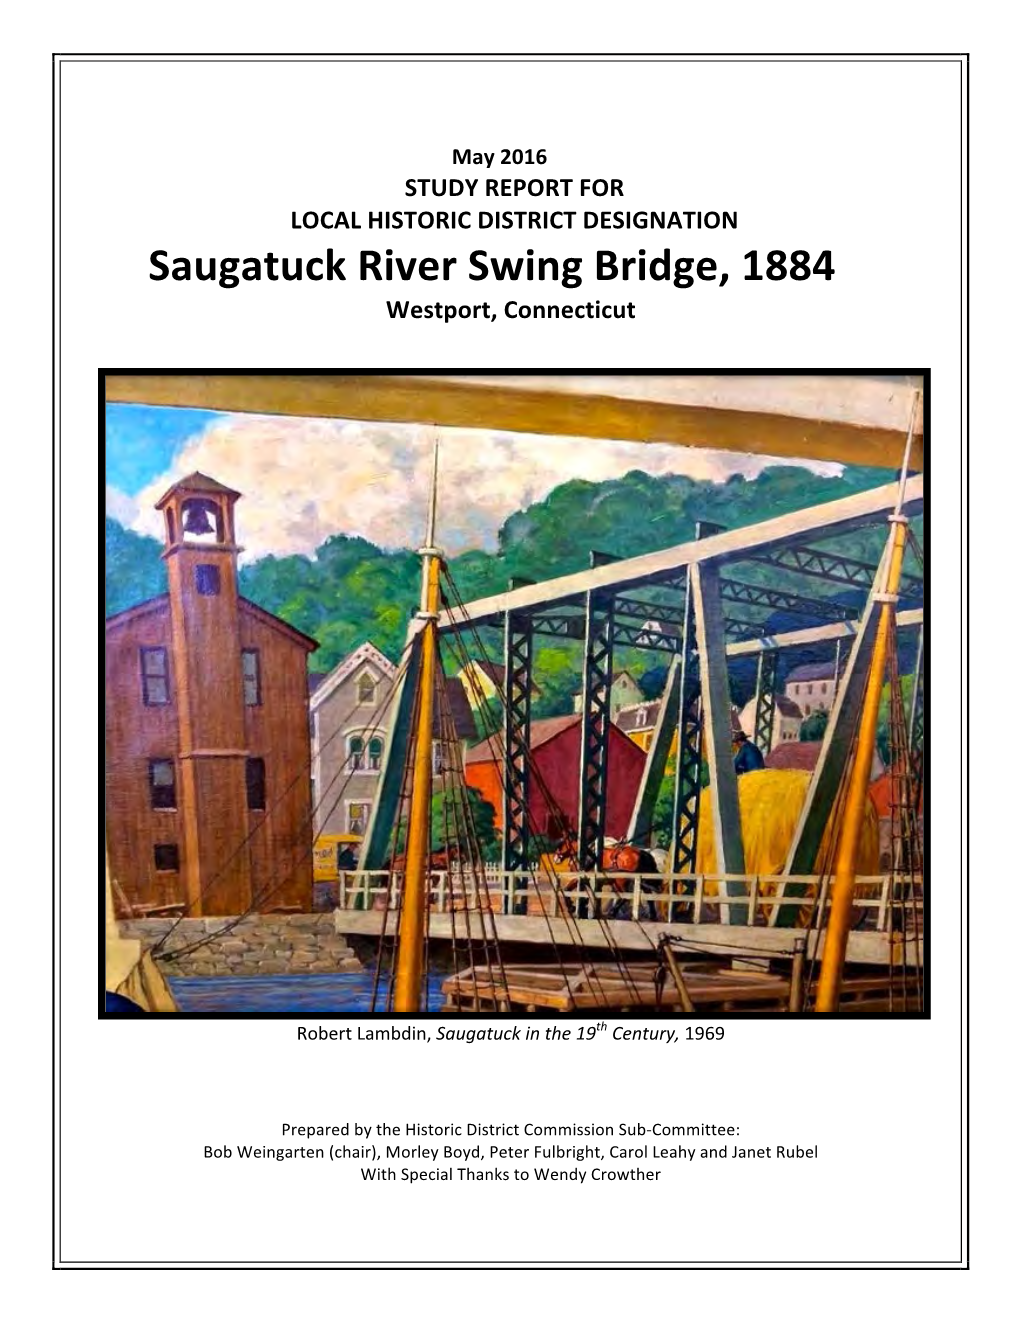 Saugatuck River Swing Bridge, 1884 Westport, Connecticut